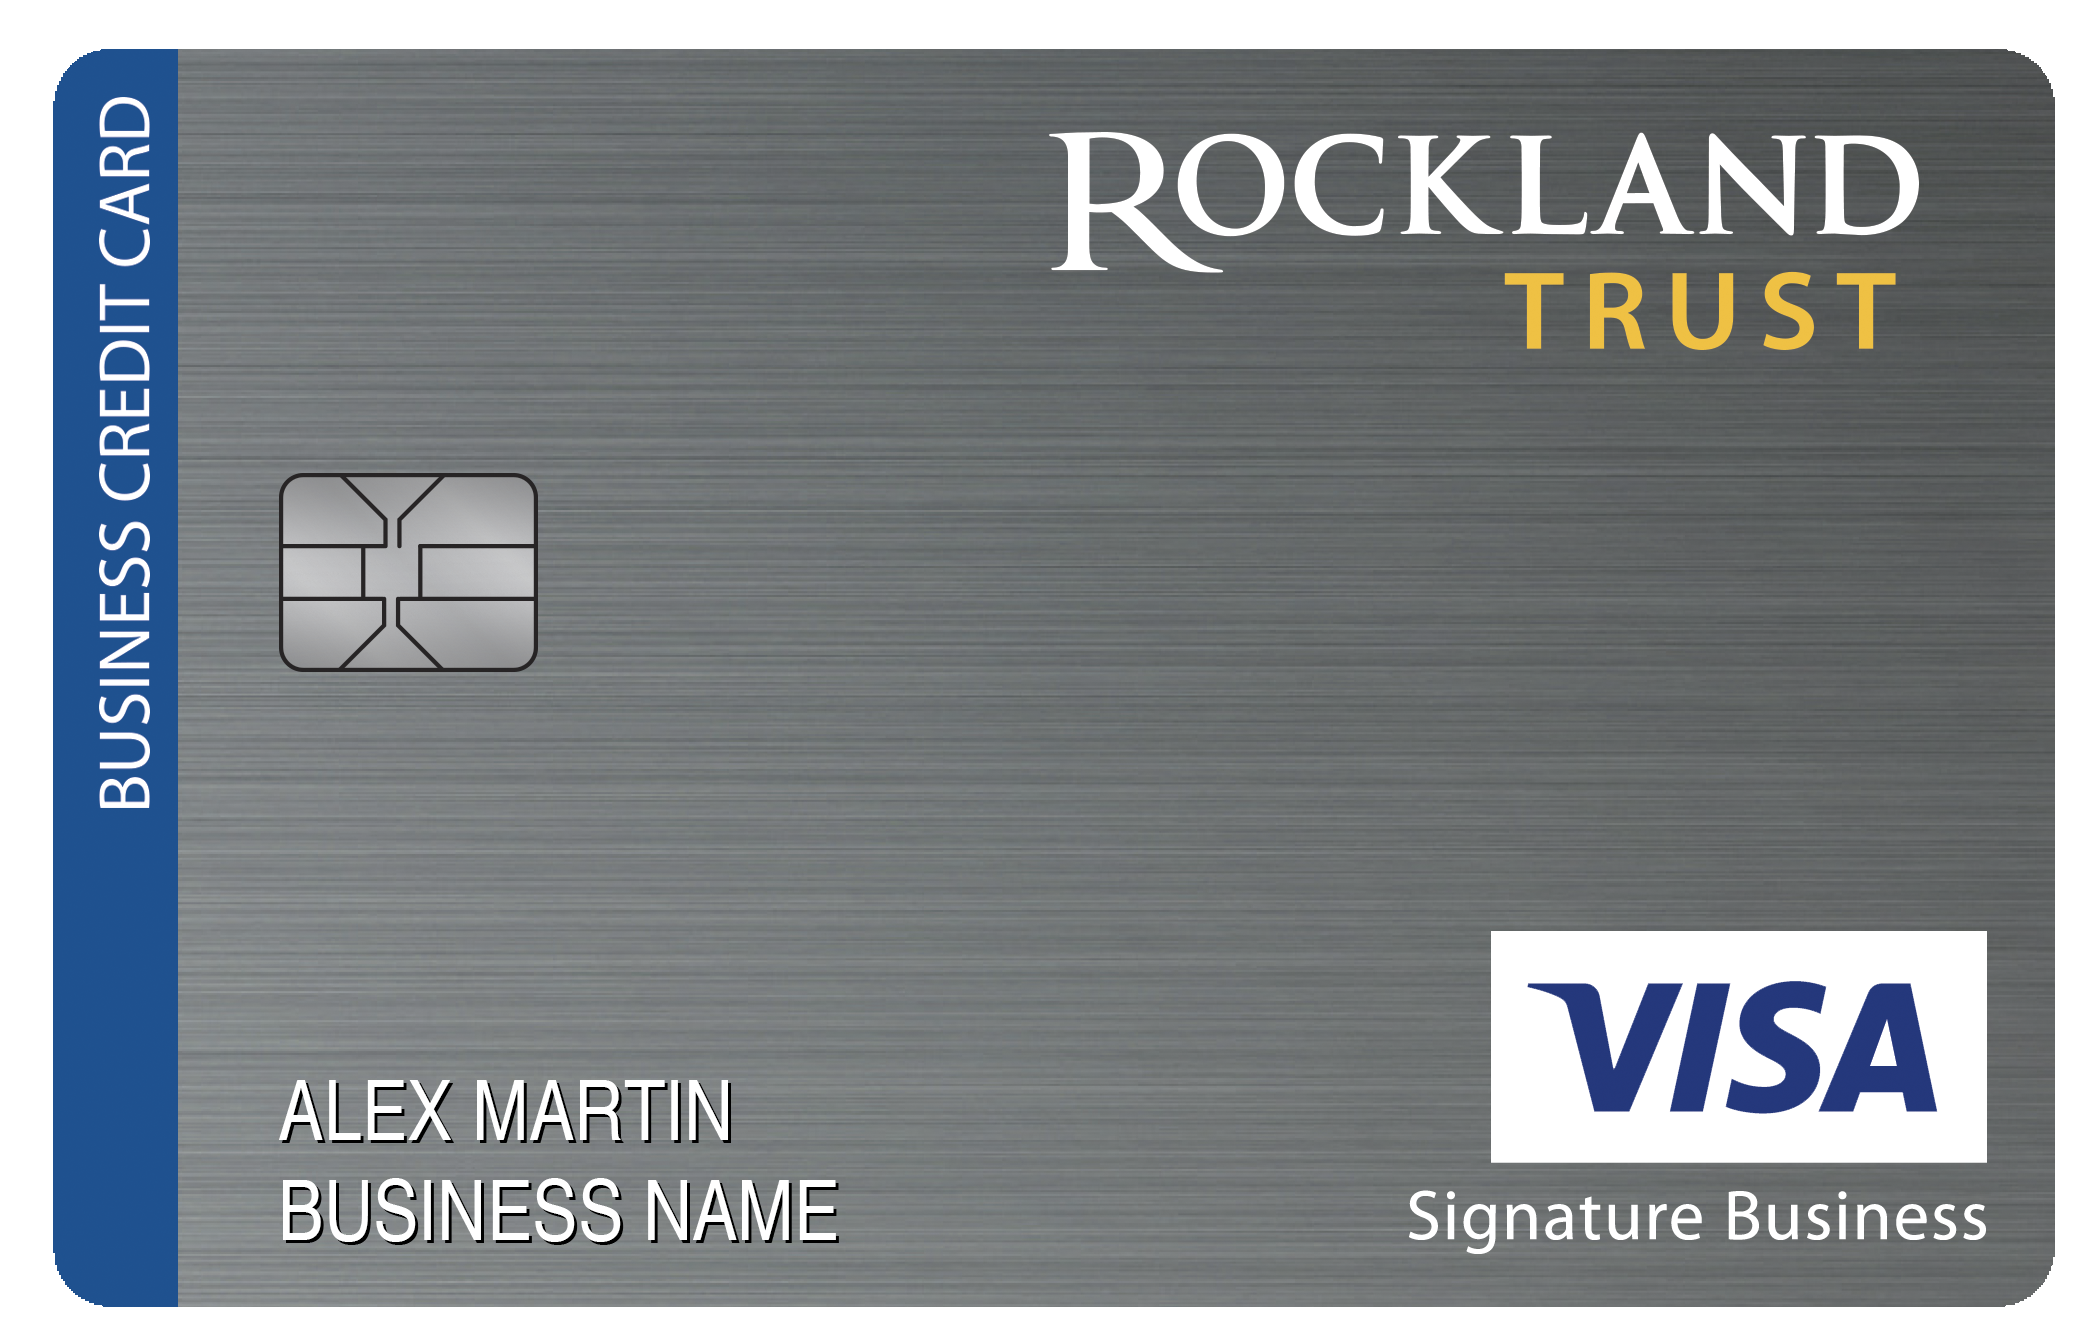 Rockland Trust Smart Business Rewards Card